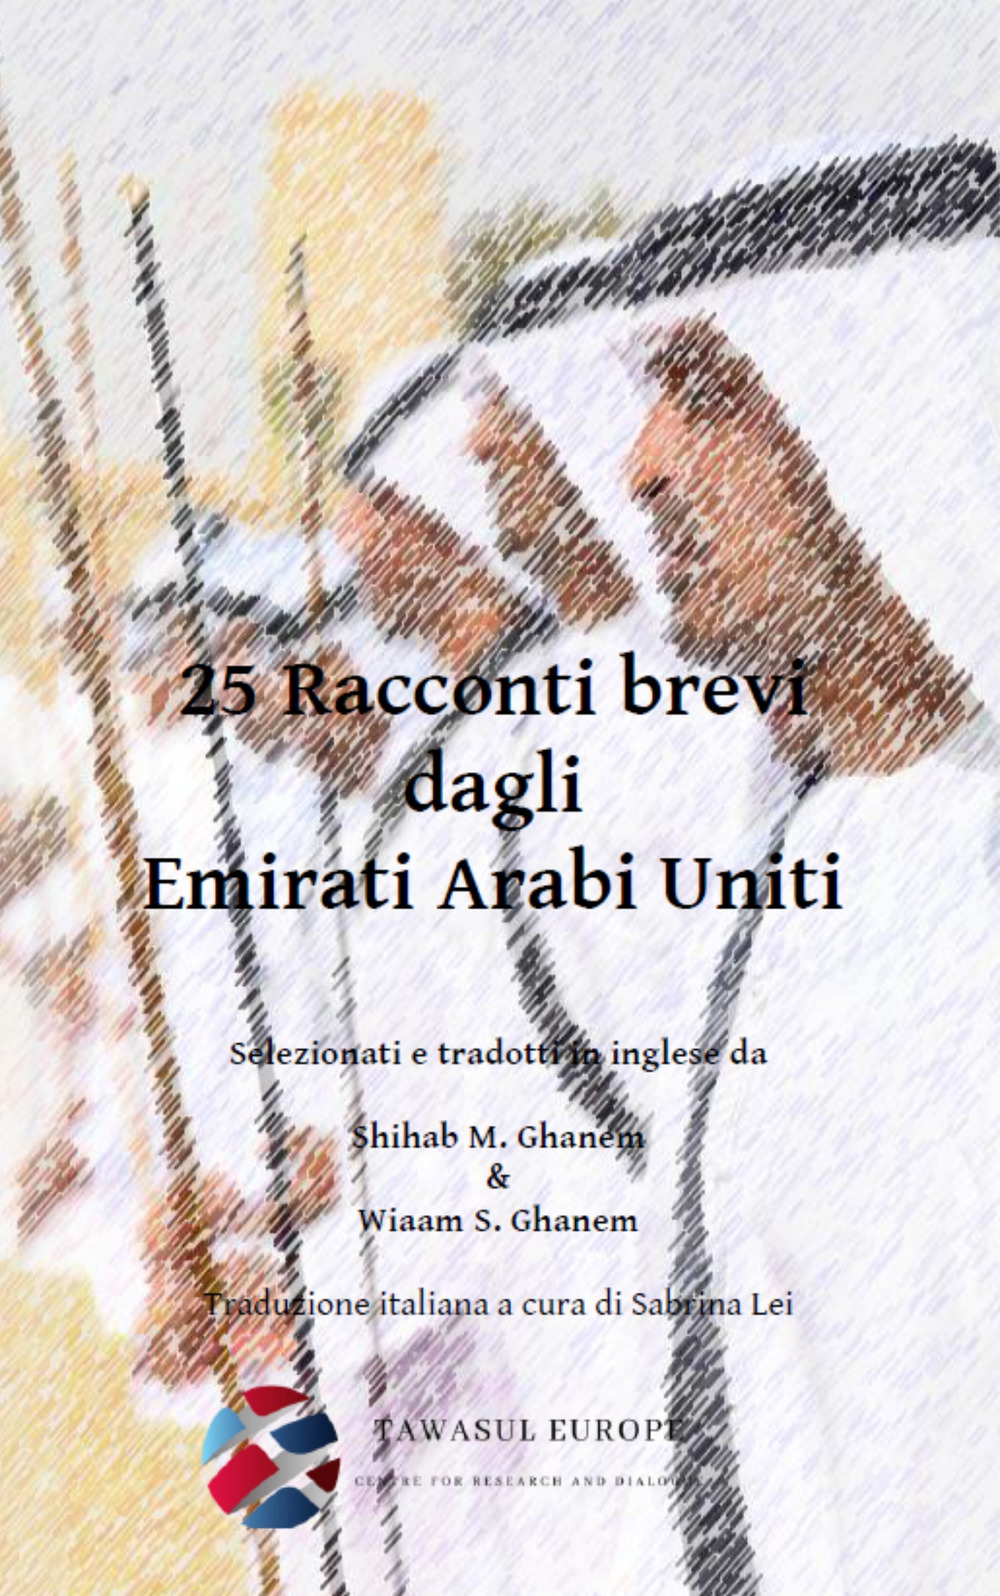 25 racconti brevi dagli Emirati Arabi Uniti